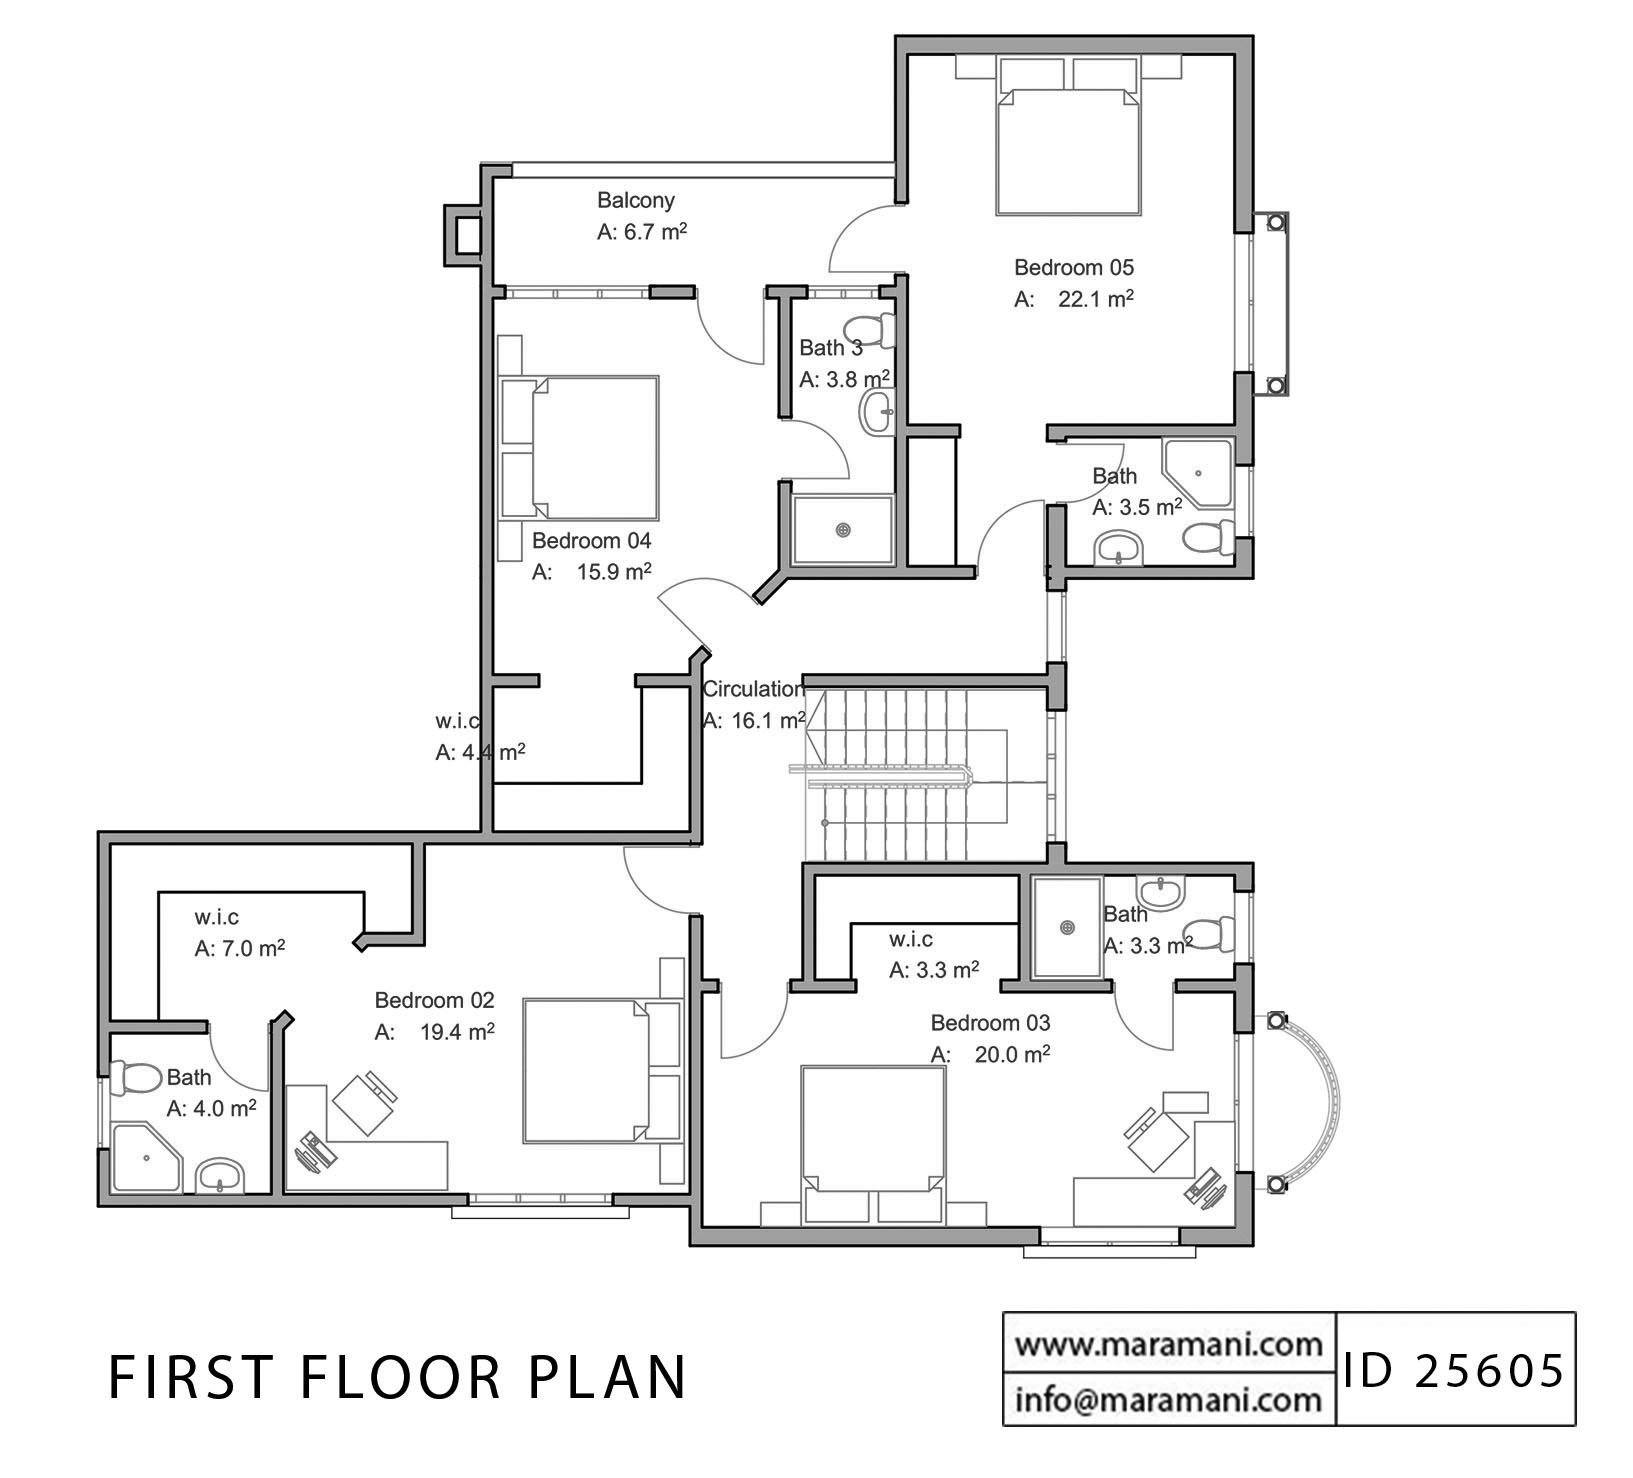 5 Bedroom House Plan - ID 25605